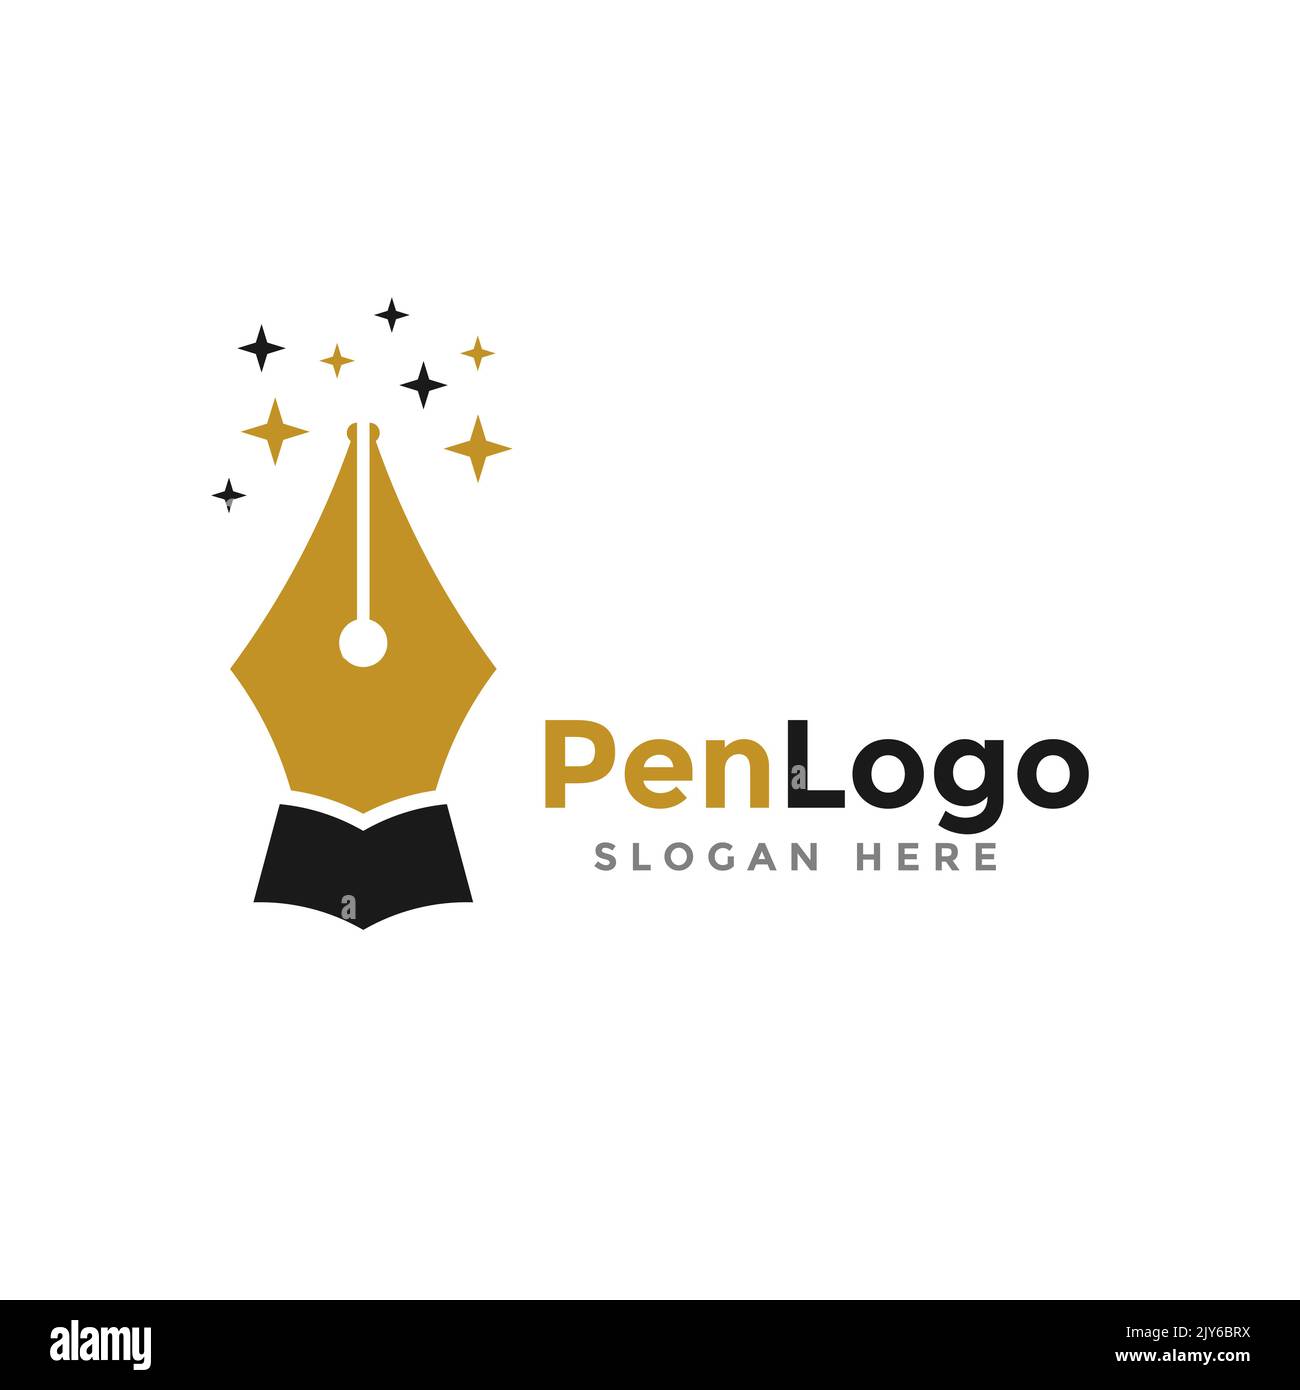 Pen logo vector, icon, symbol, education illustration design template ...